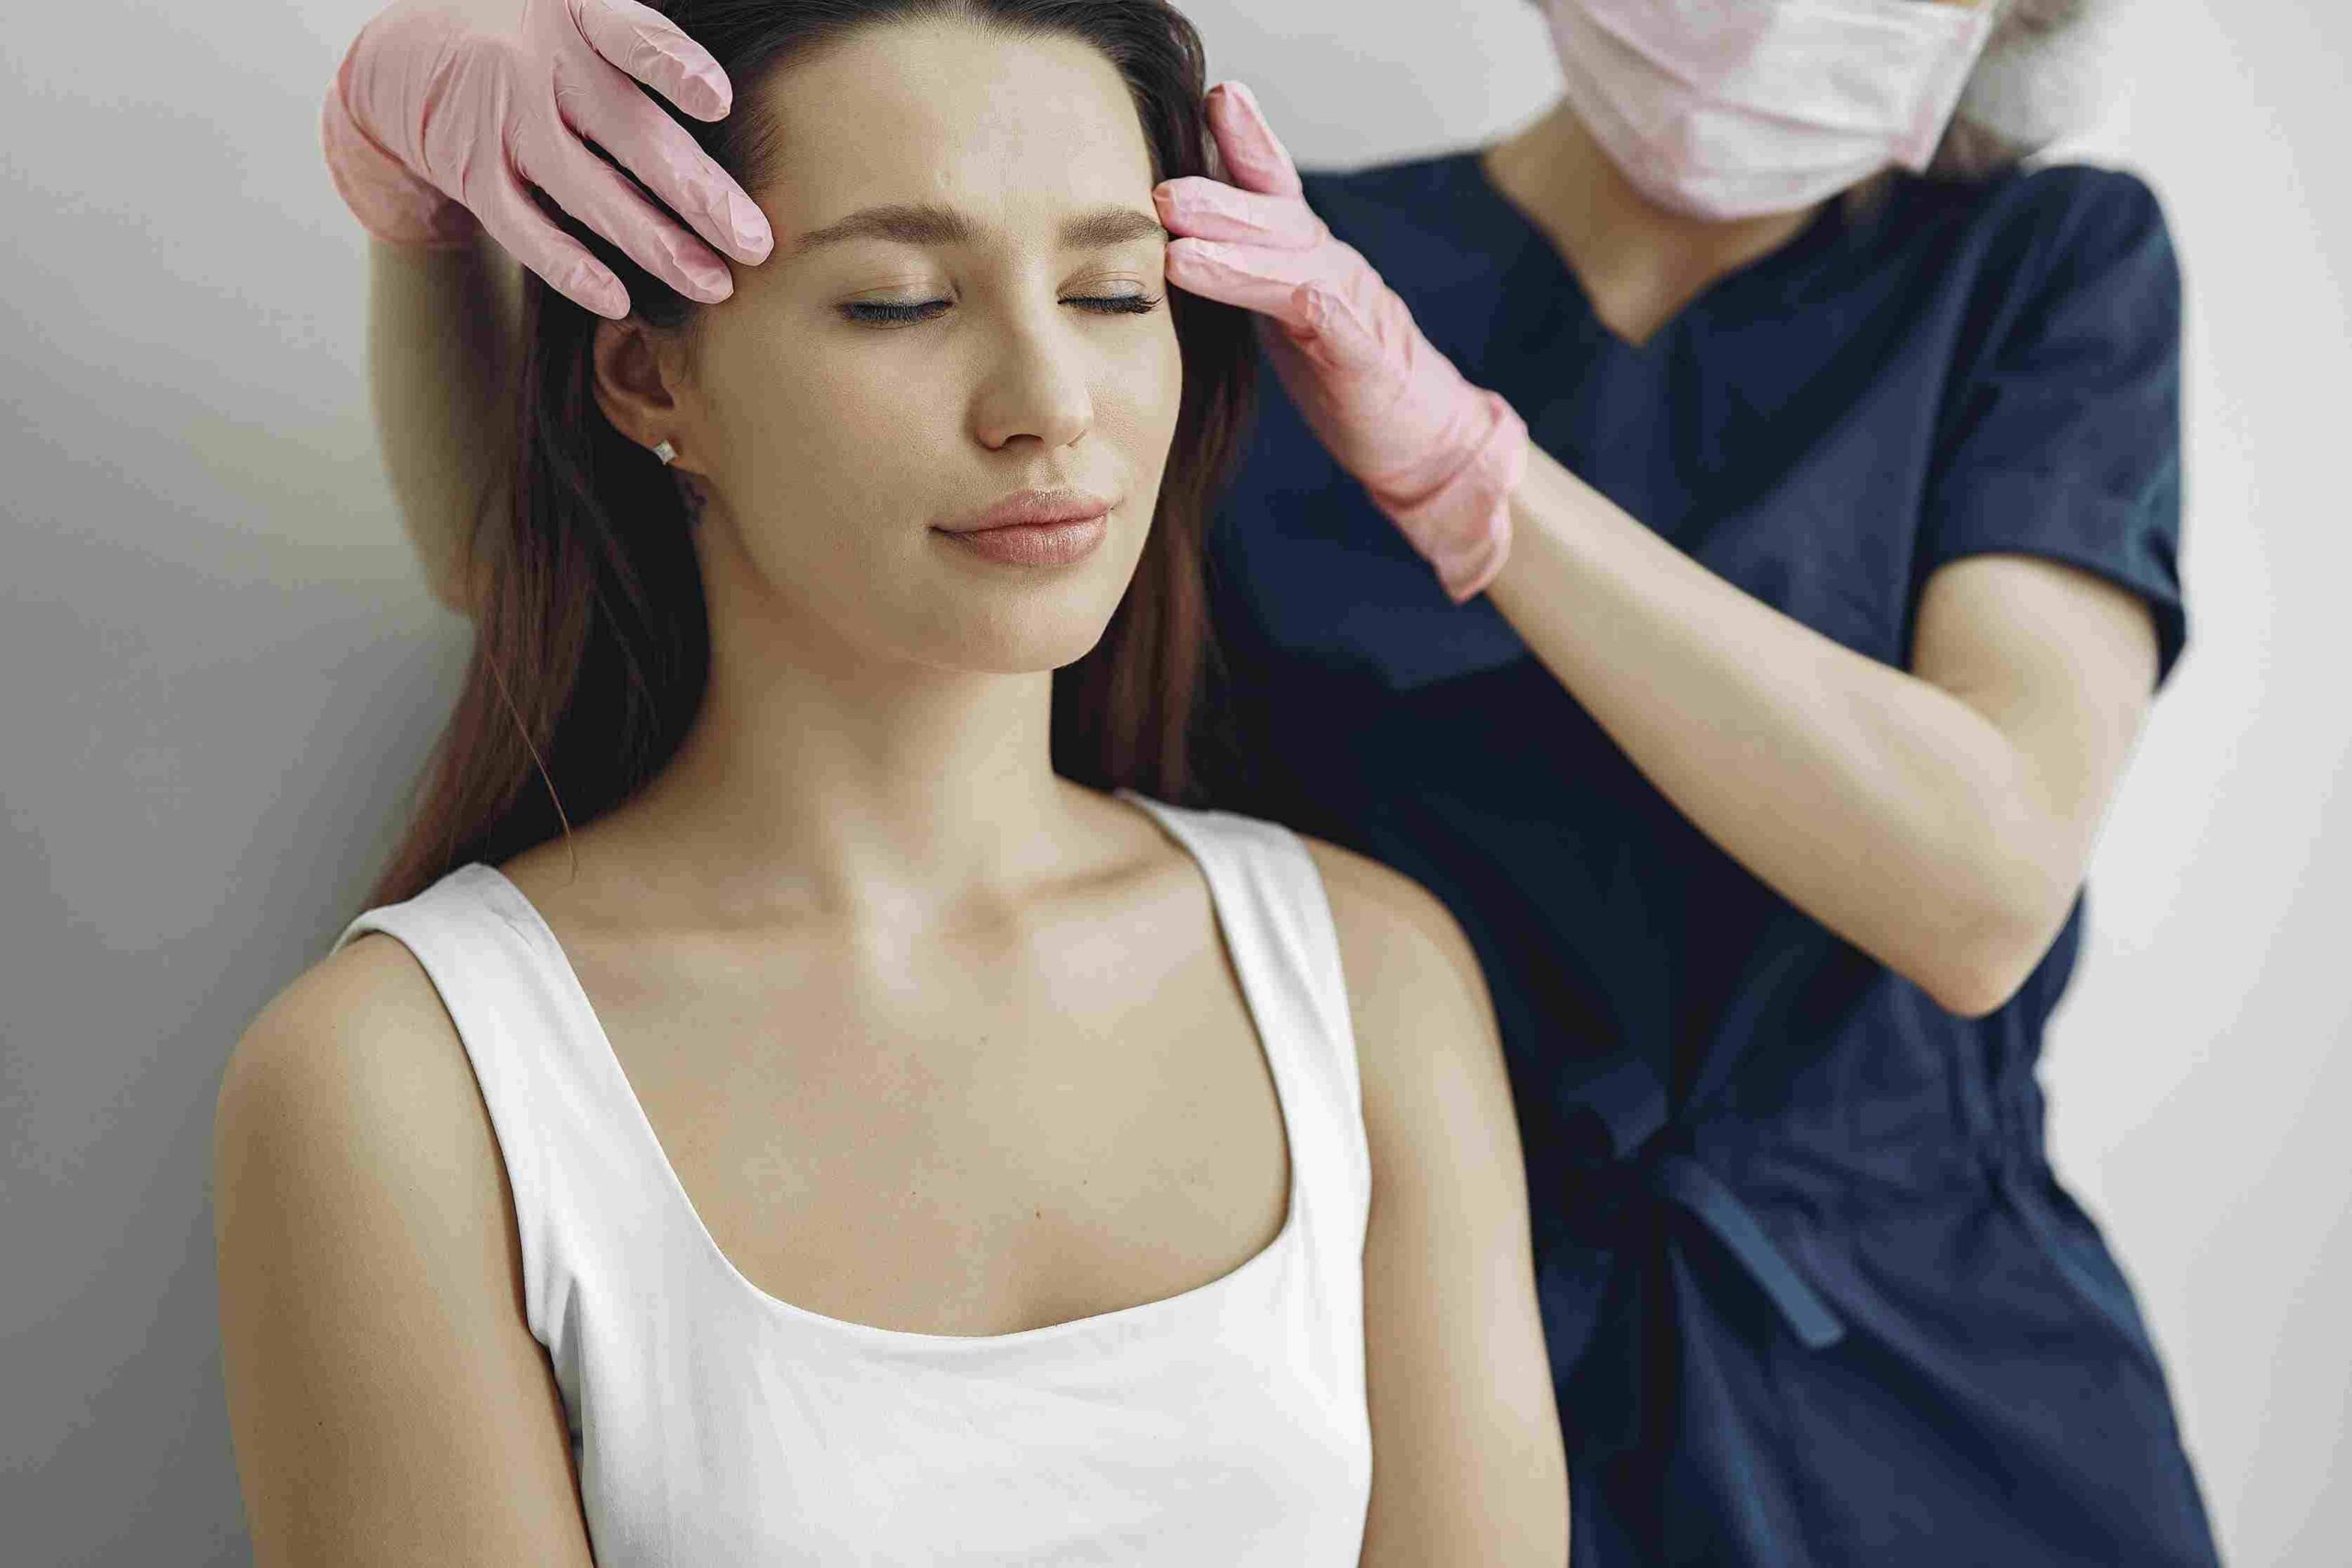 Non-invasive therapies for tension headaches